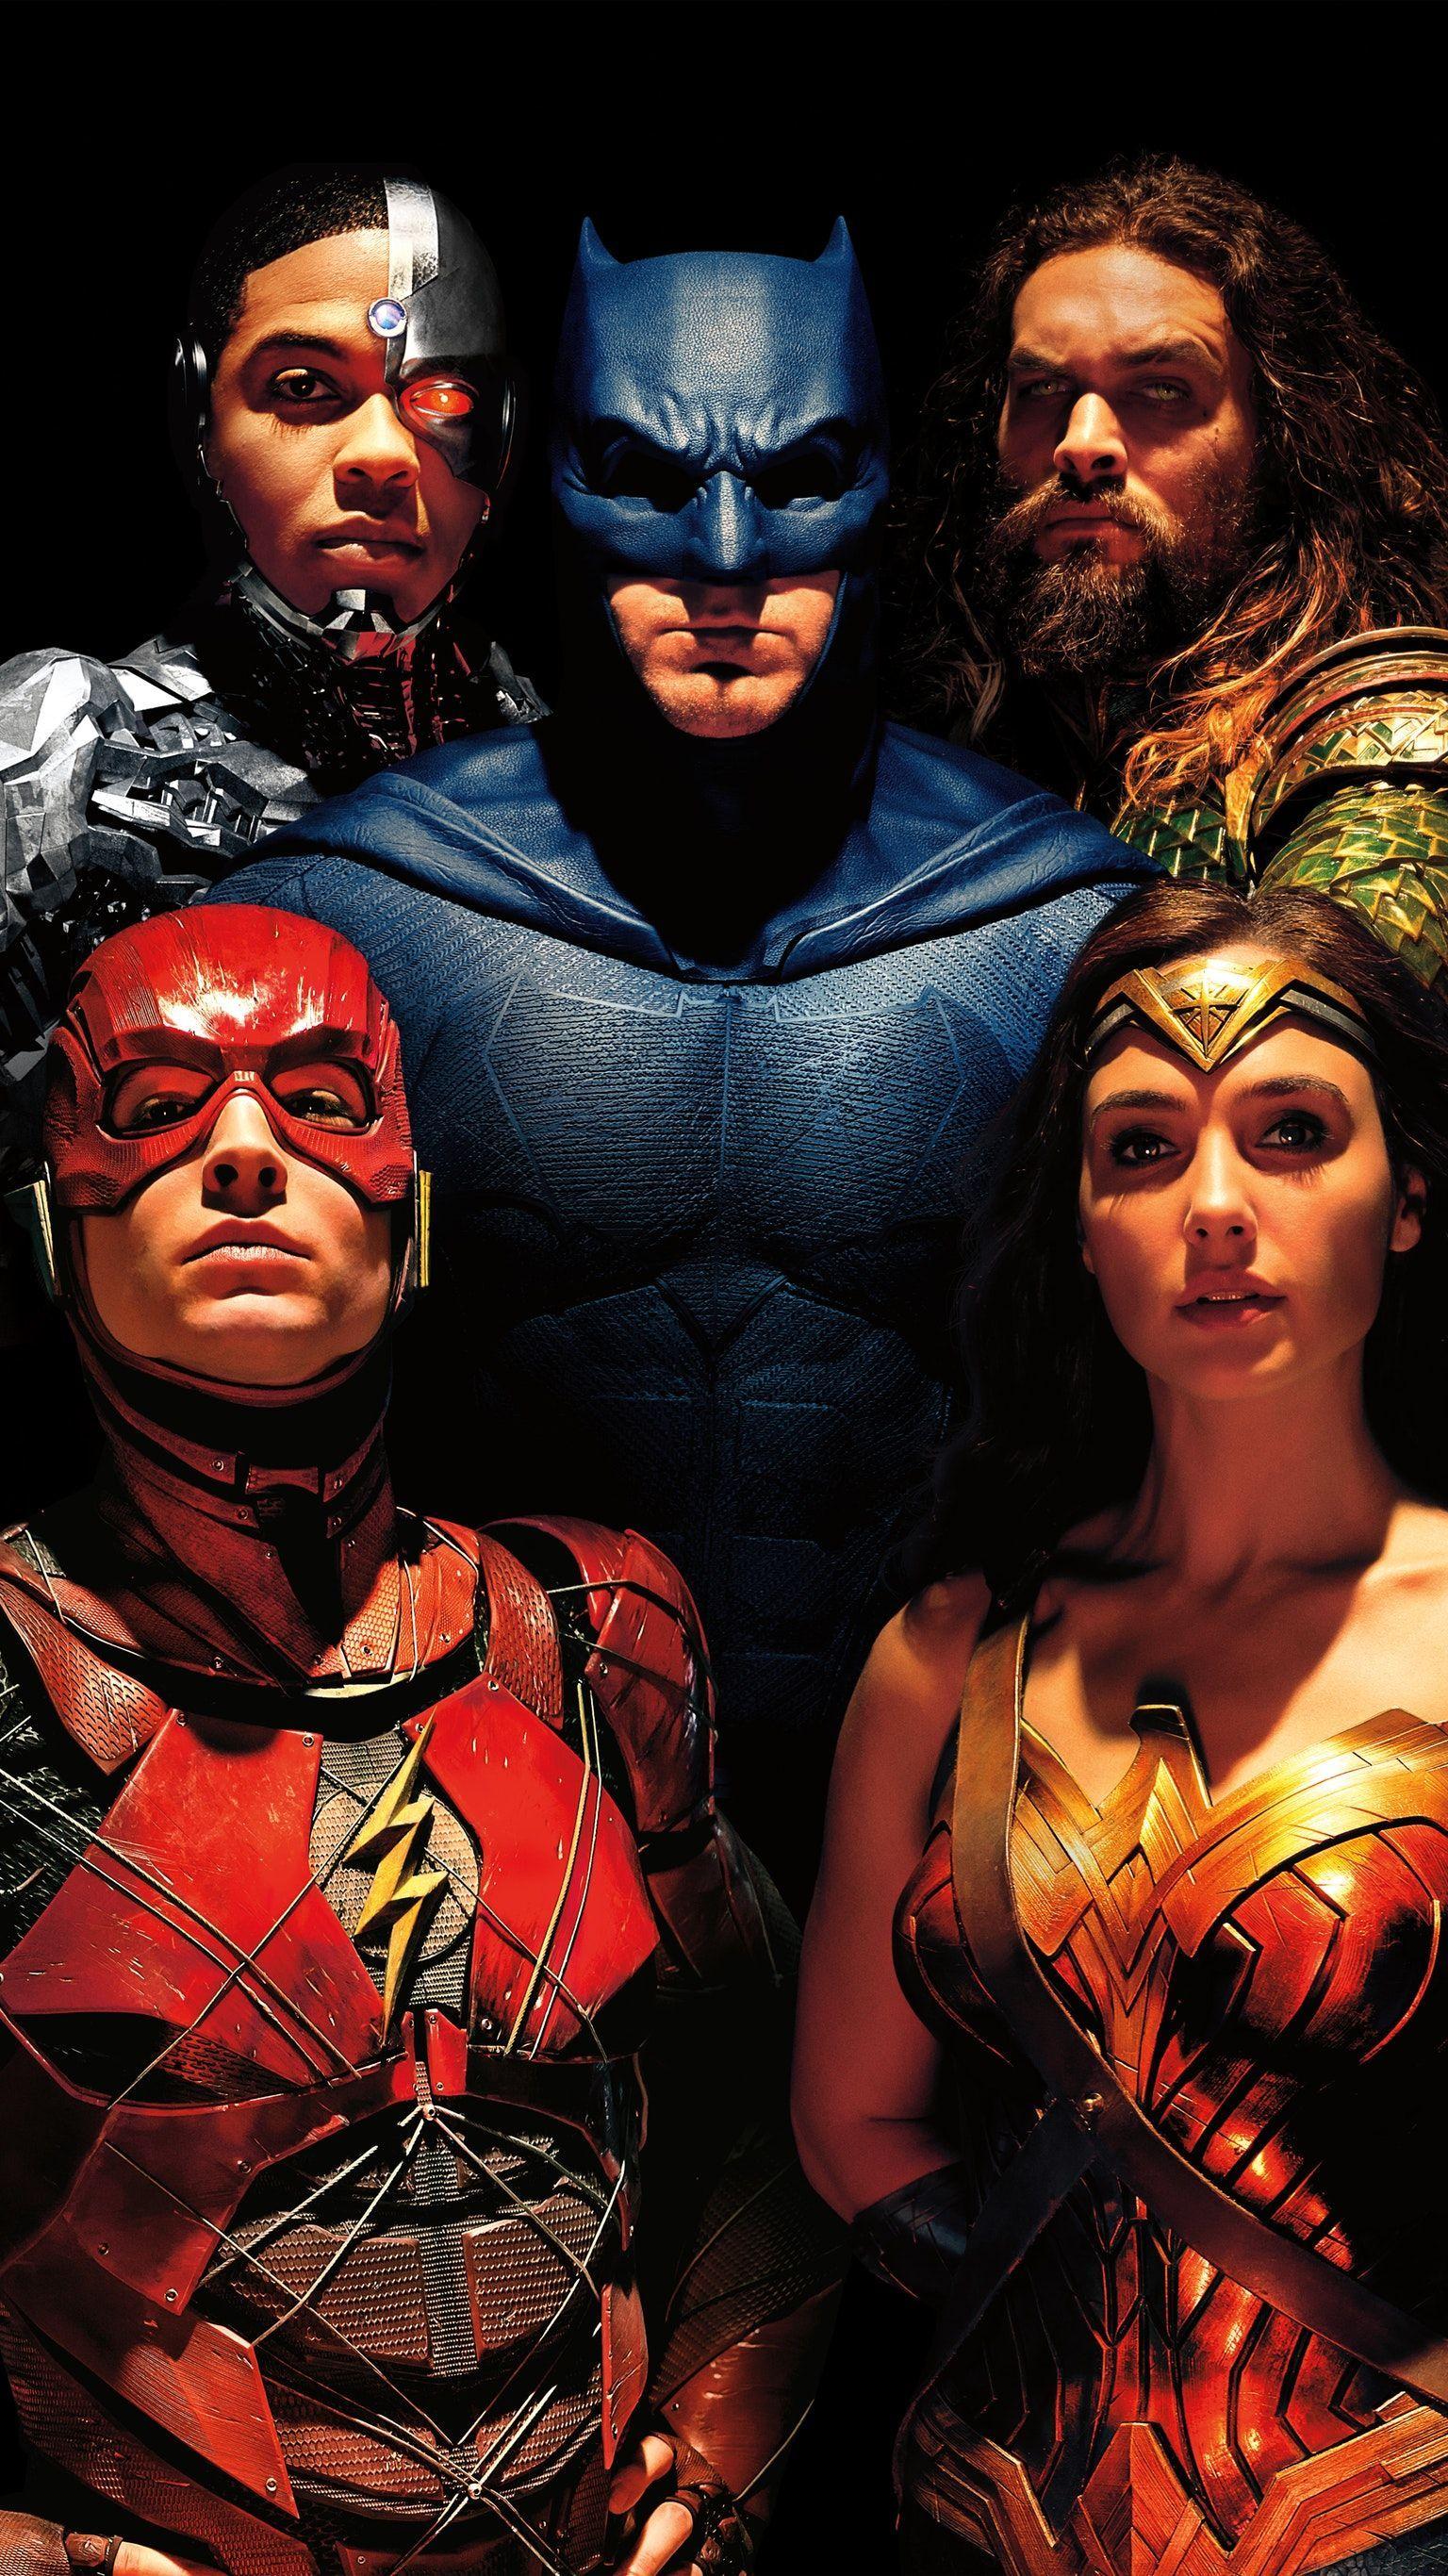 Justice League (2017) Phone Wallpaper. Moviemania. Justice league Justice league full movie, Justice league